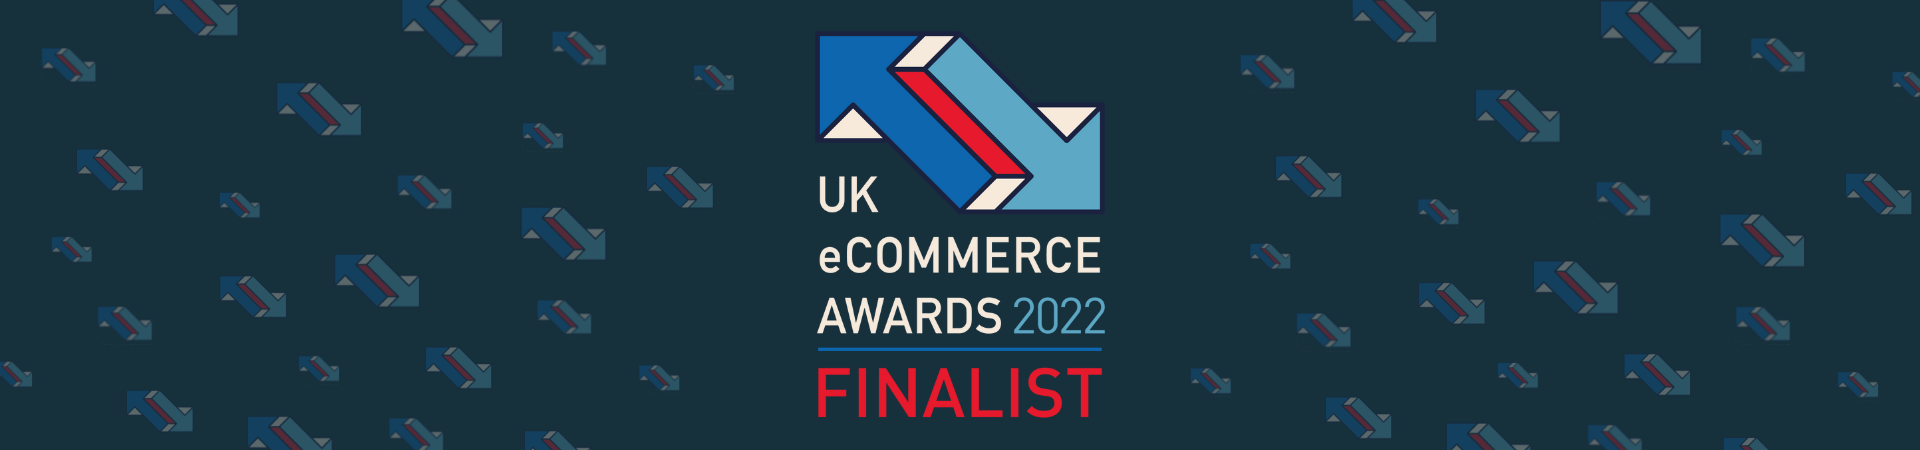 Banner - UK eCommerce awards 2022 finalist badge